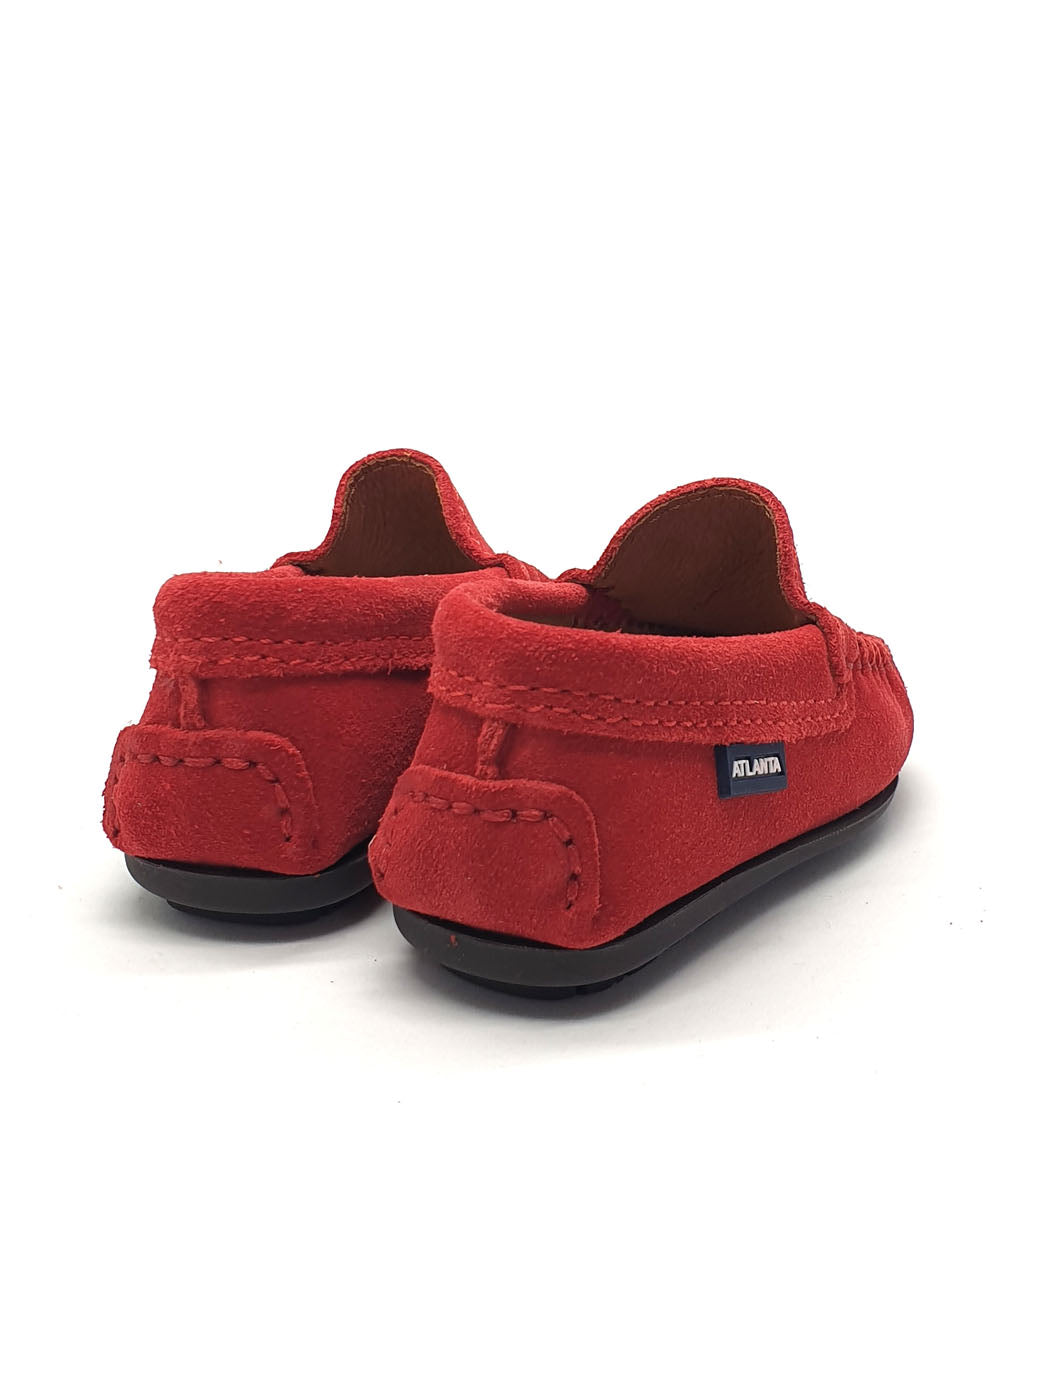 Atlanta Mocassin- Baby Shoes Moccasins Red-15G199